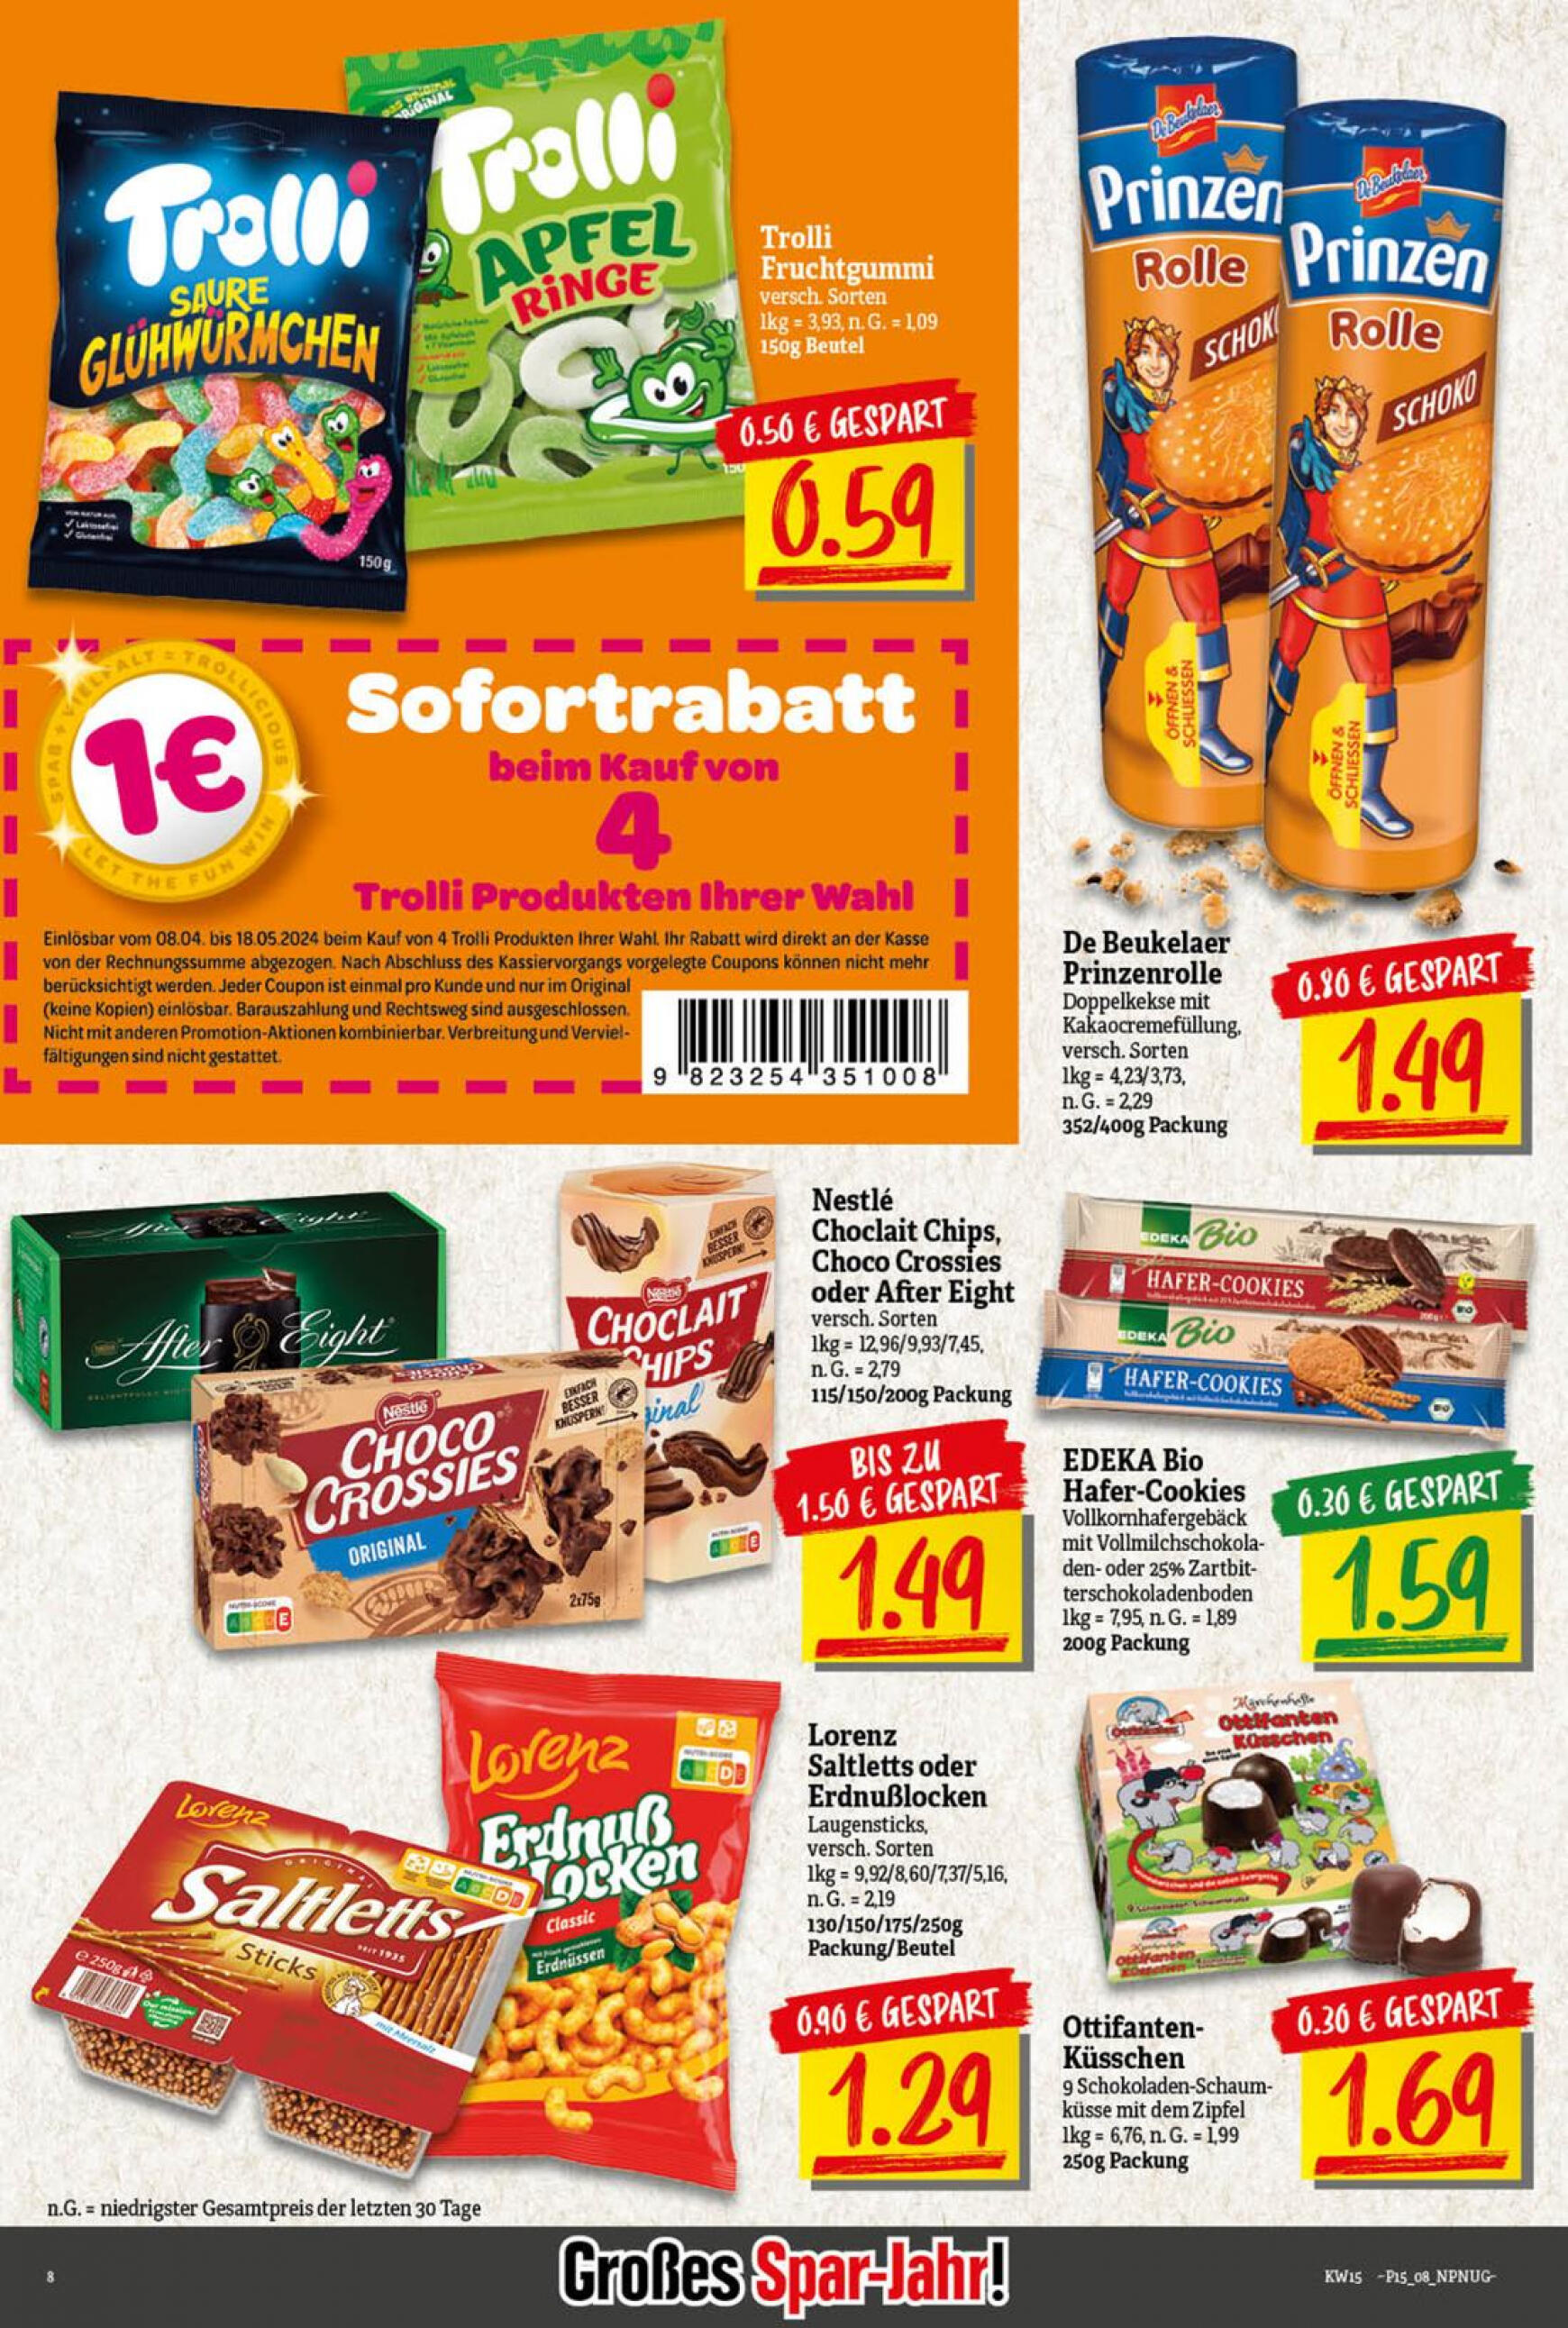 np - Flyer NP - Edeka aktuell 08.04. - 13.04. - page: 8